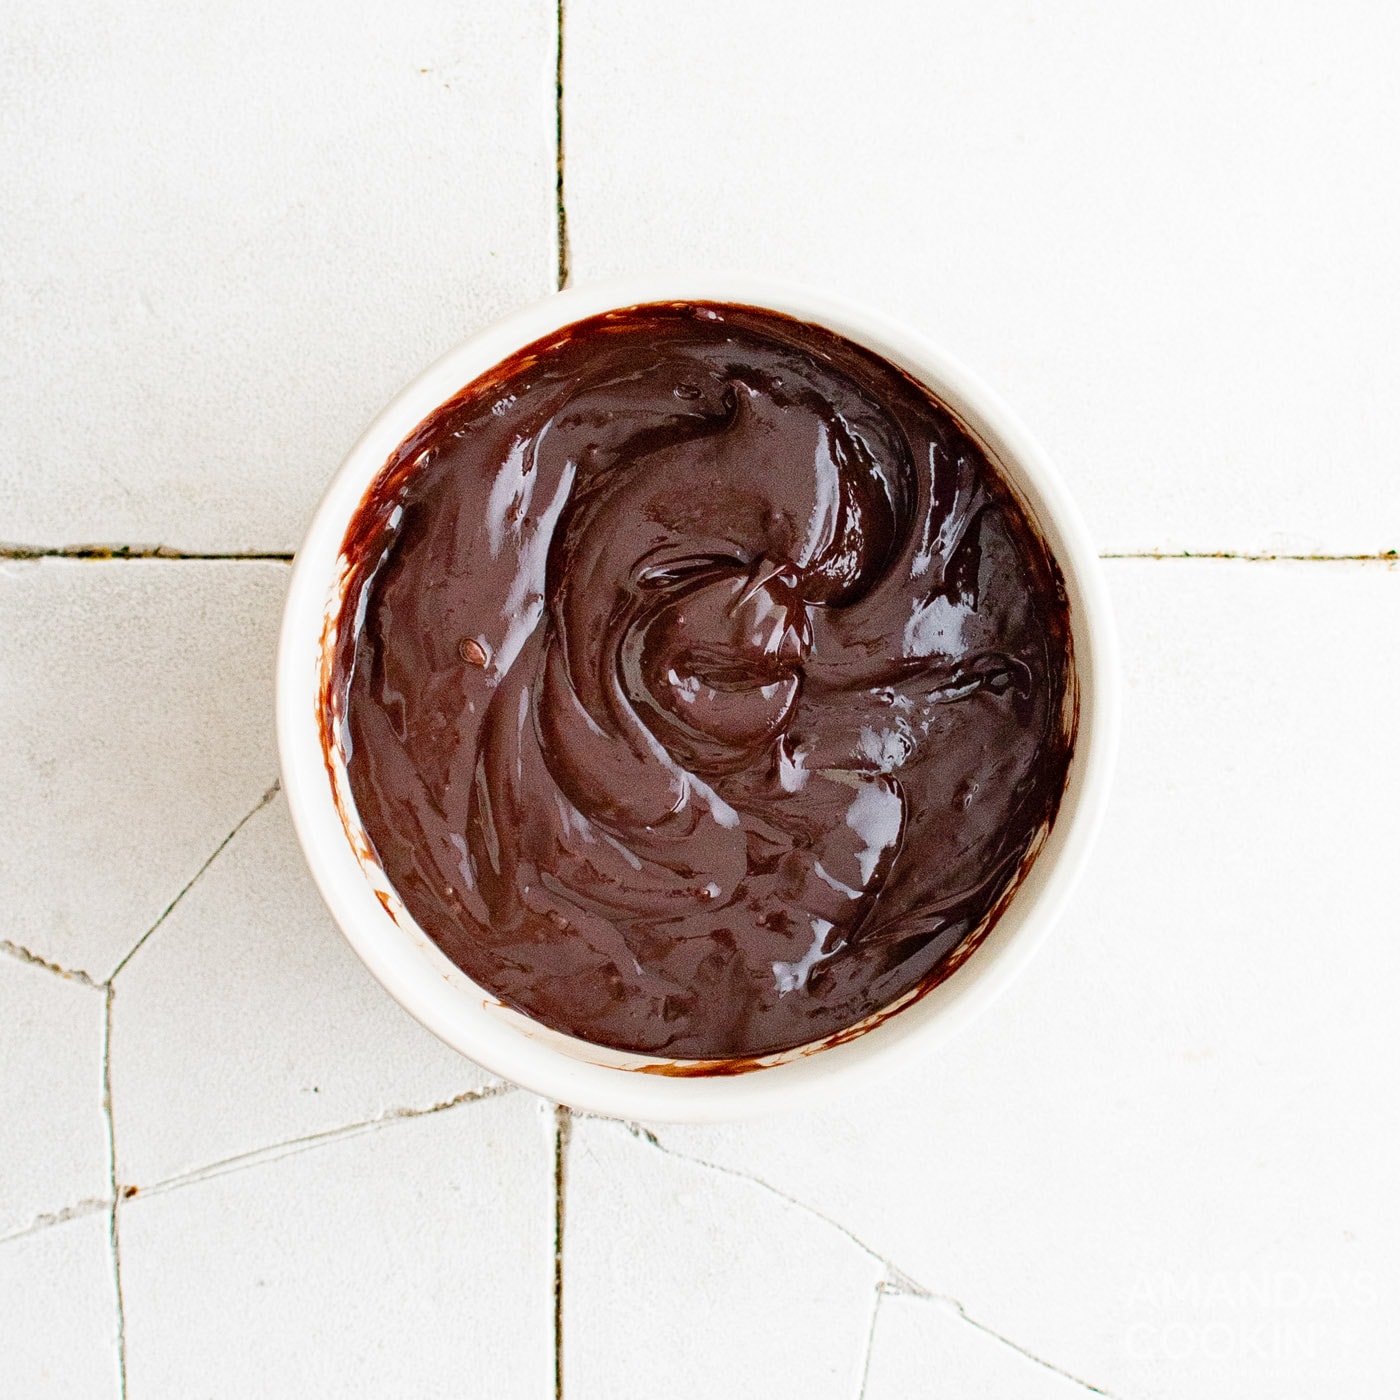 chocolate ganache in a bowl